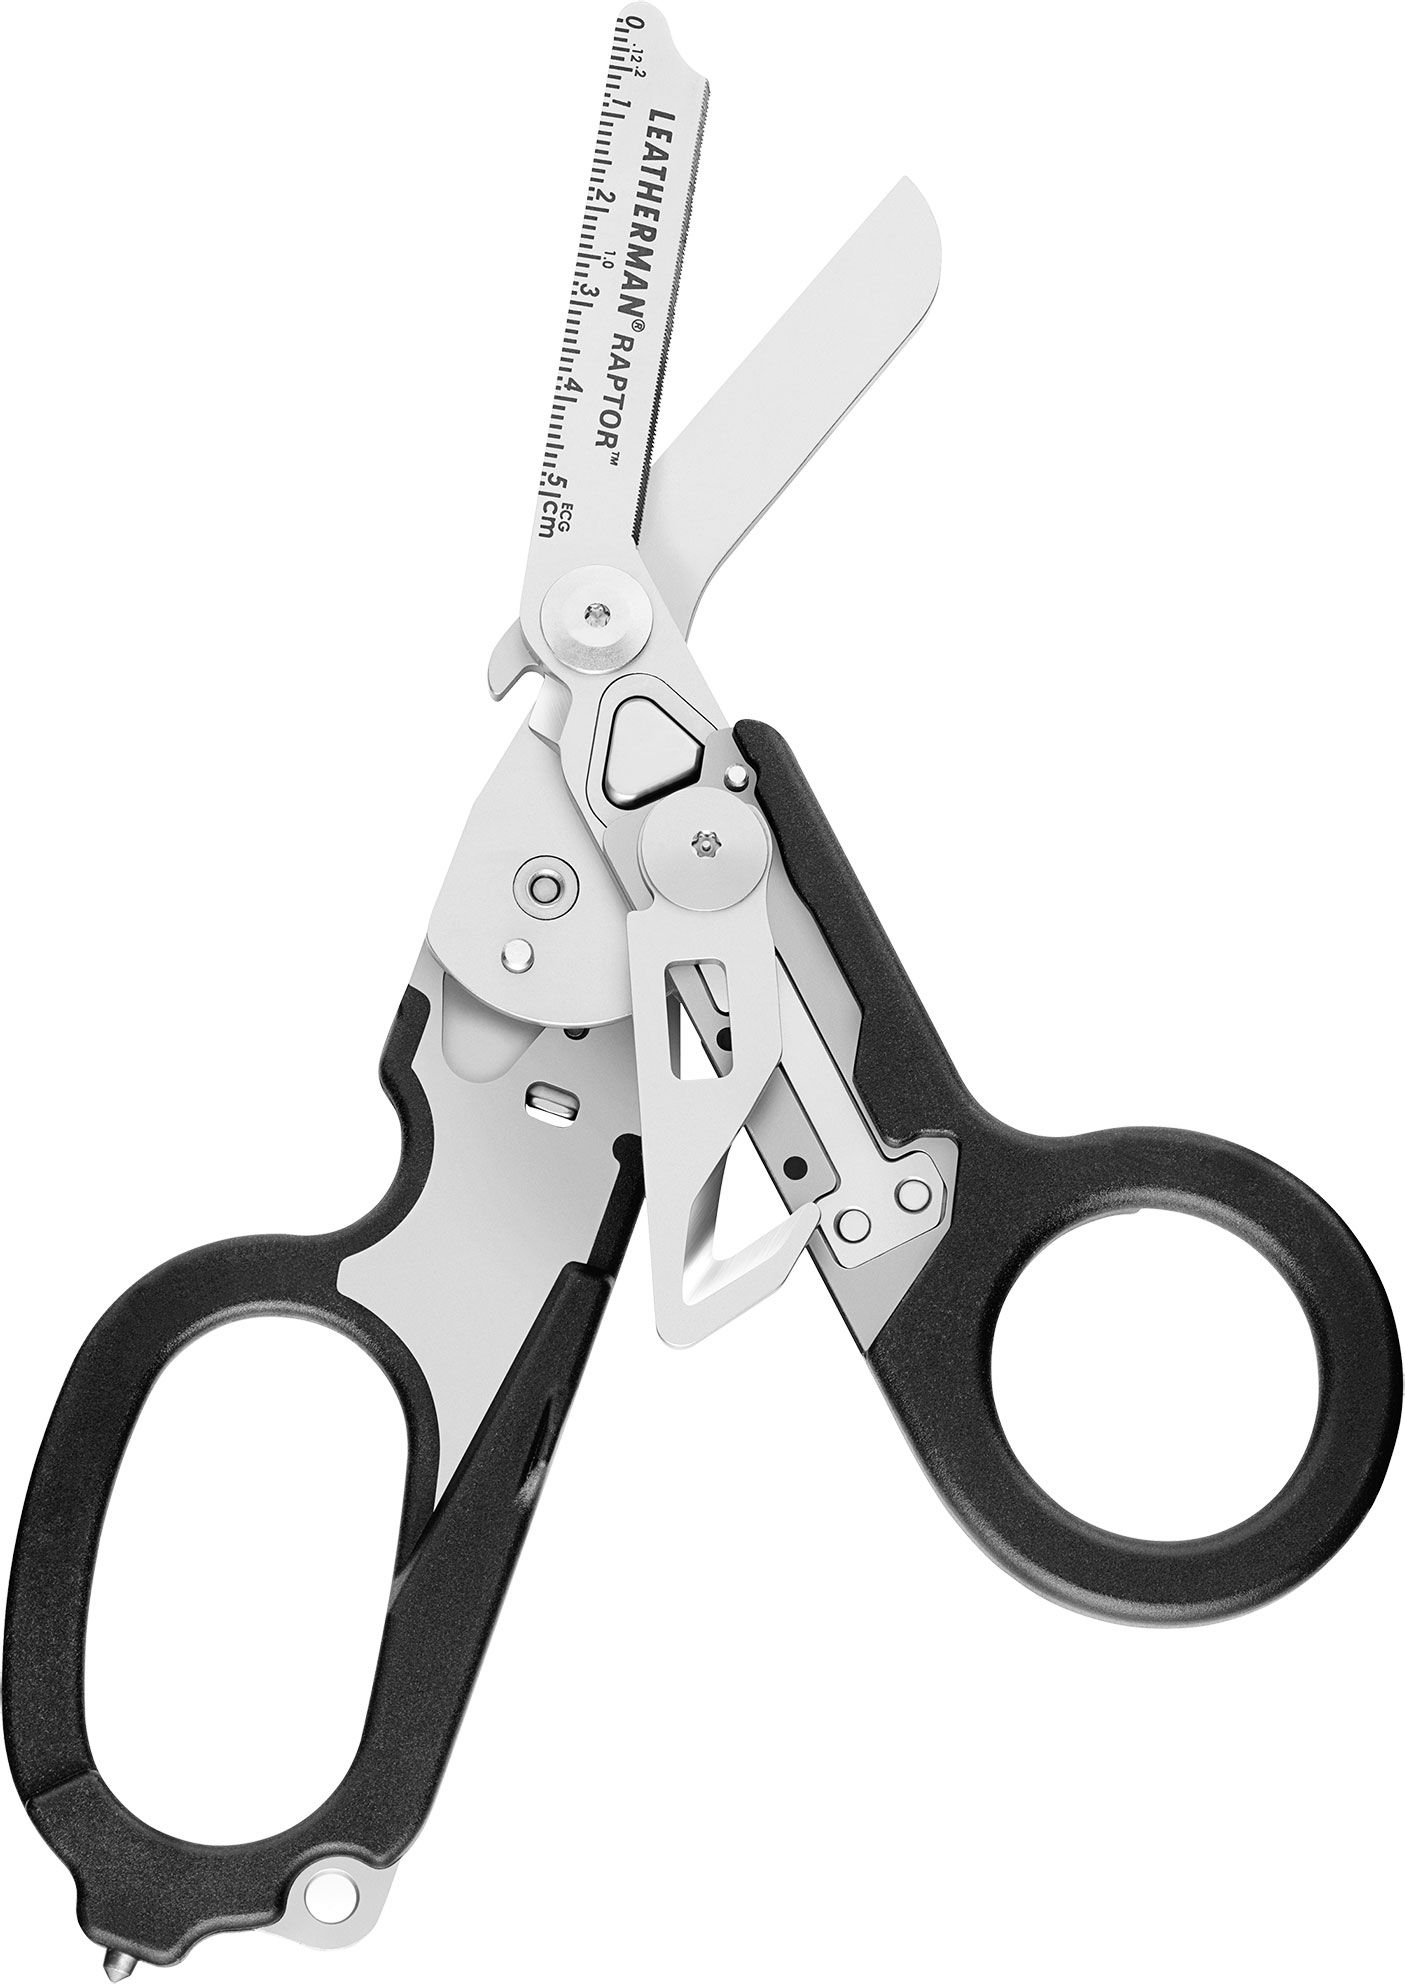 Budget Trauma 4 Mini Shear Scissors, Please Read , AS IS SHEARS